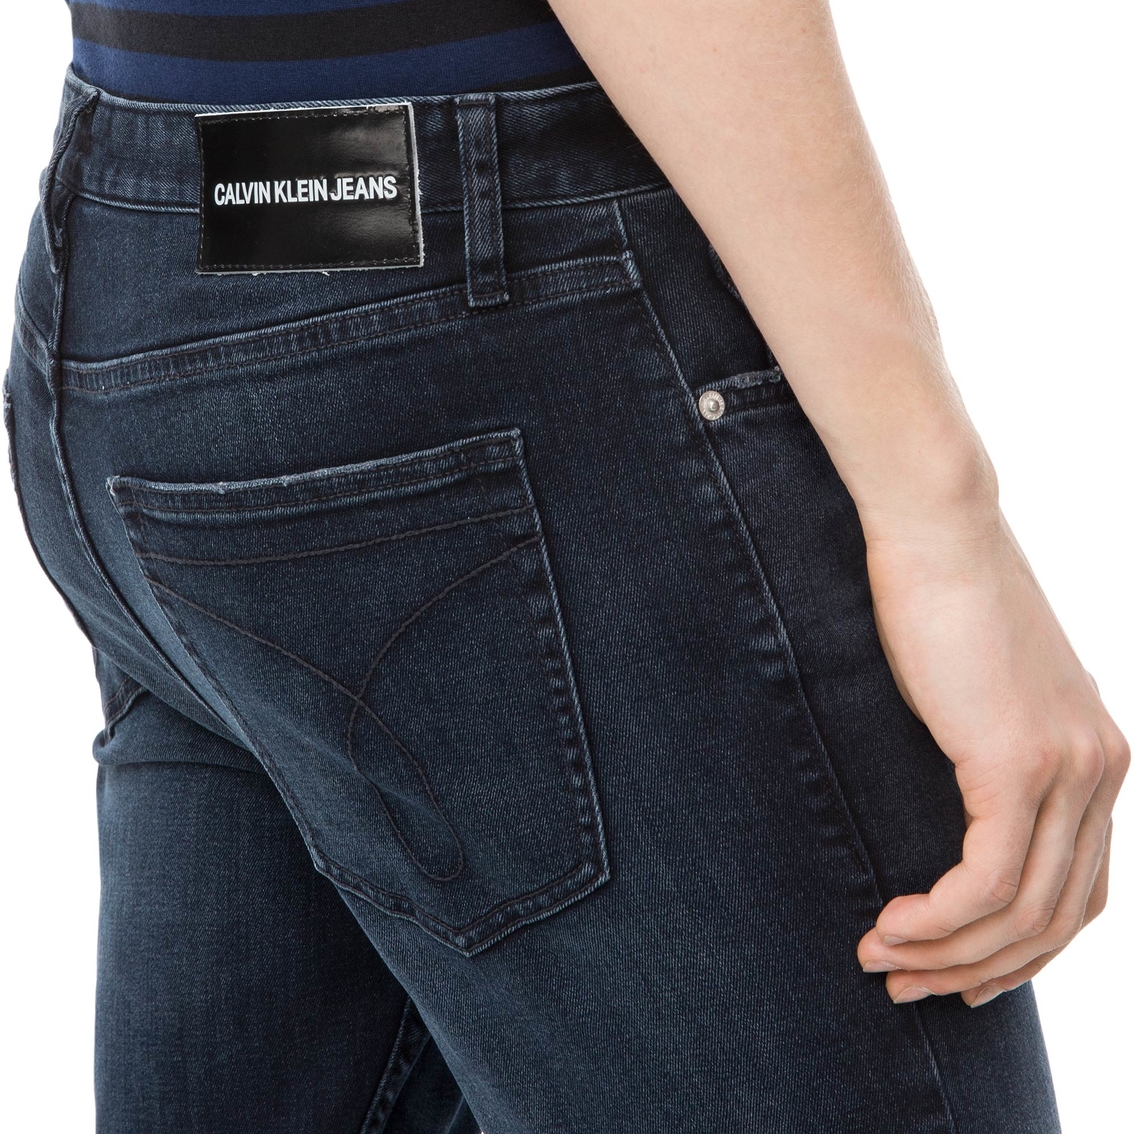 Calvin Klein Jeans | Boston The Blue Slim Shop & Accessories Jeans | Black | Clothing Exchange Jeans